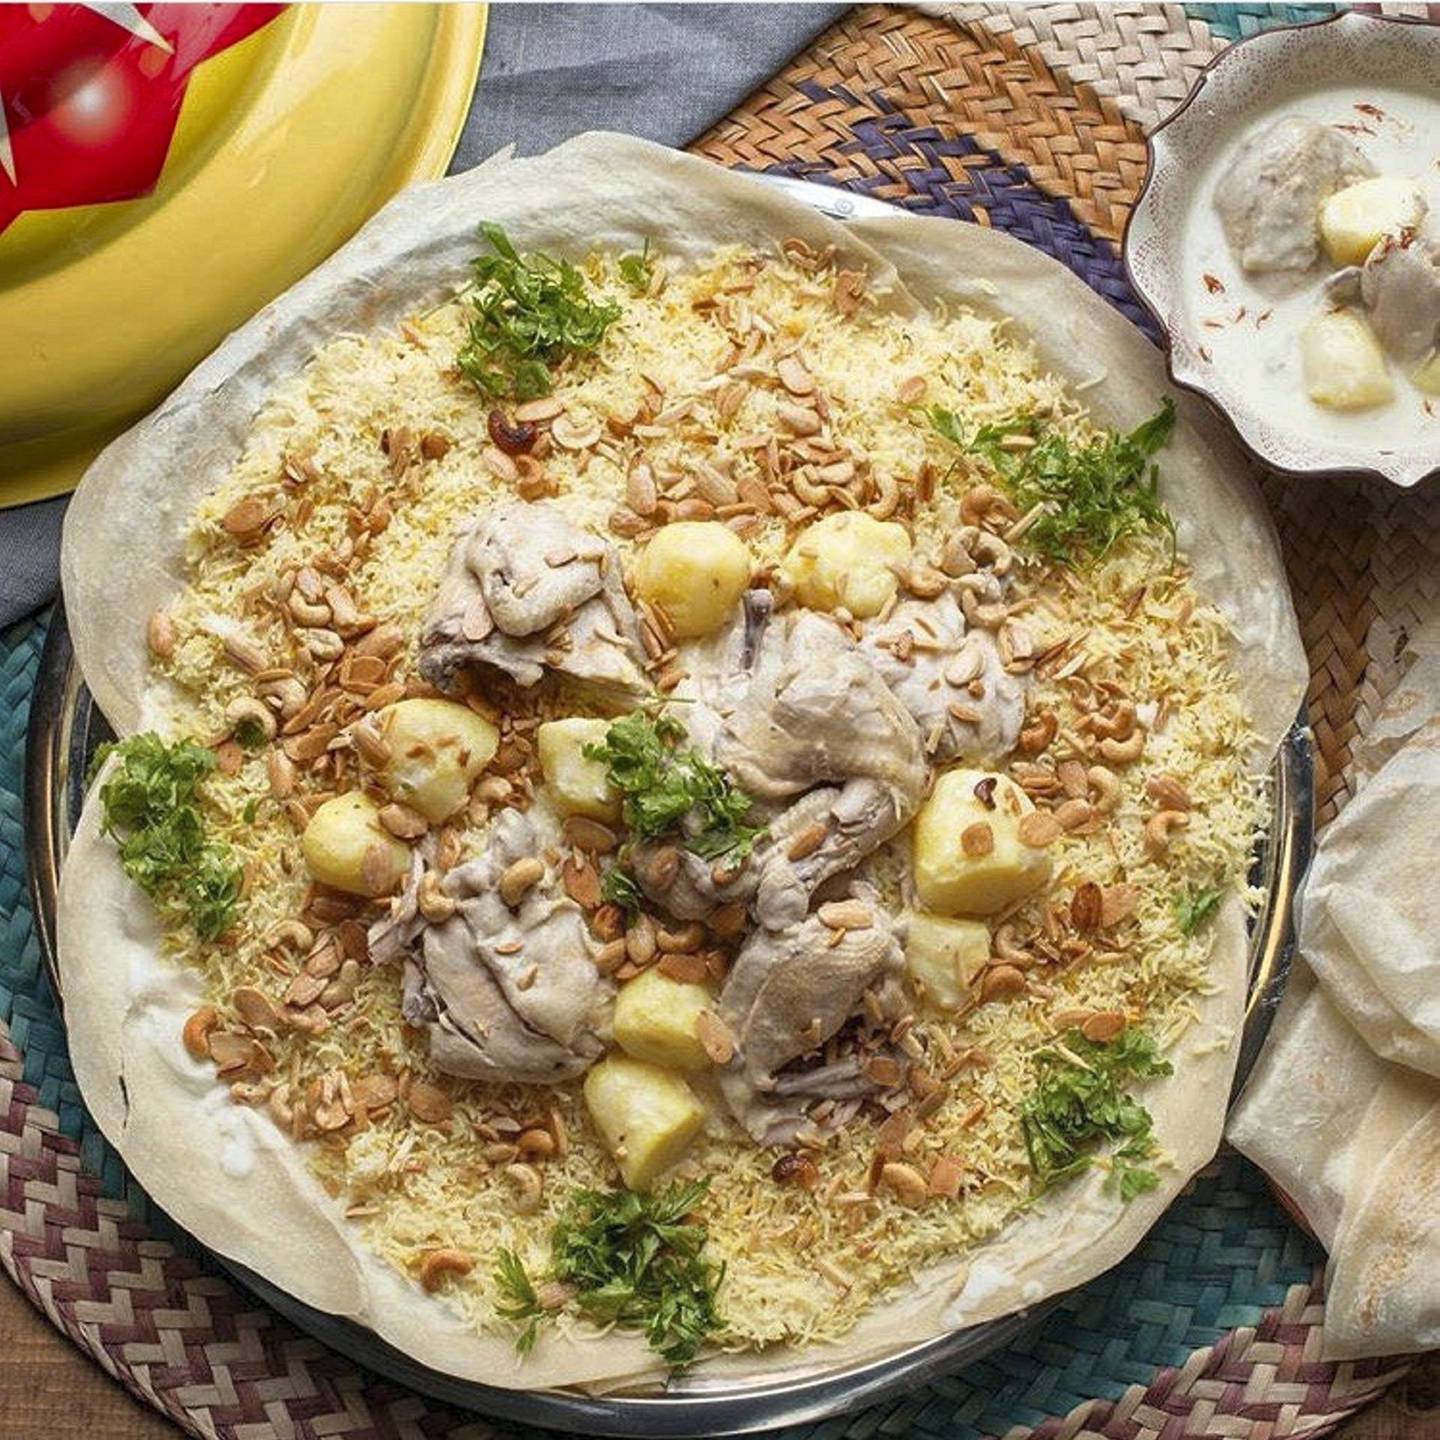 Chef Douha's interpretation of a traditional mansaf. Courtesy Douha Al Otaishan